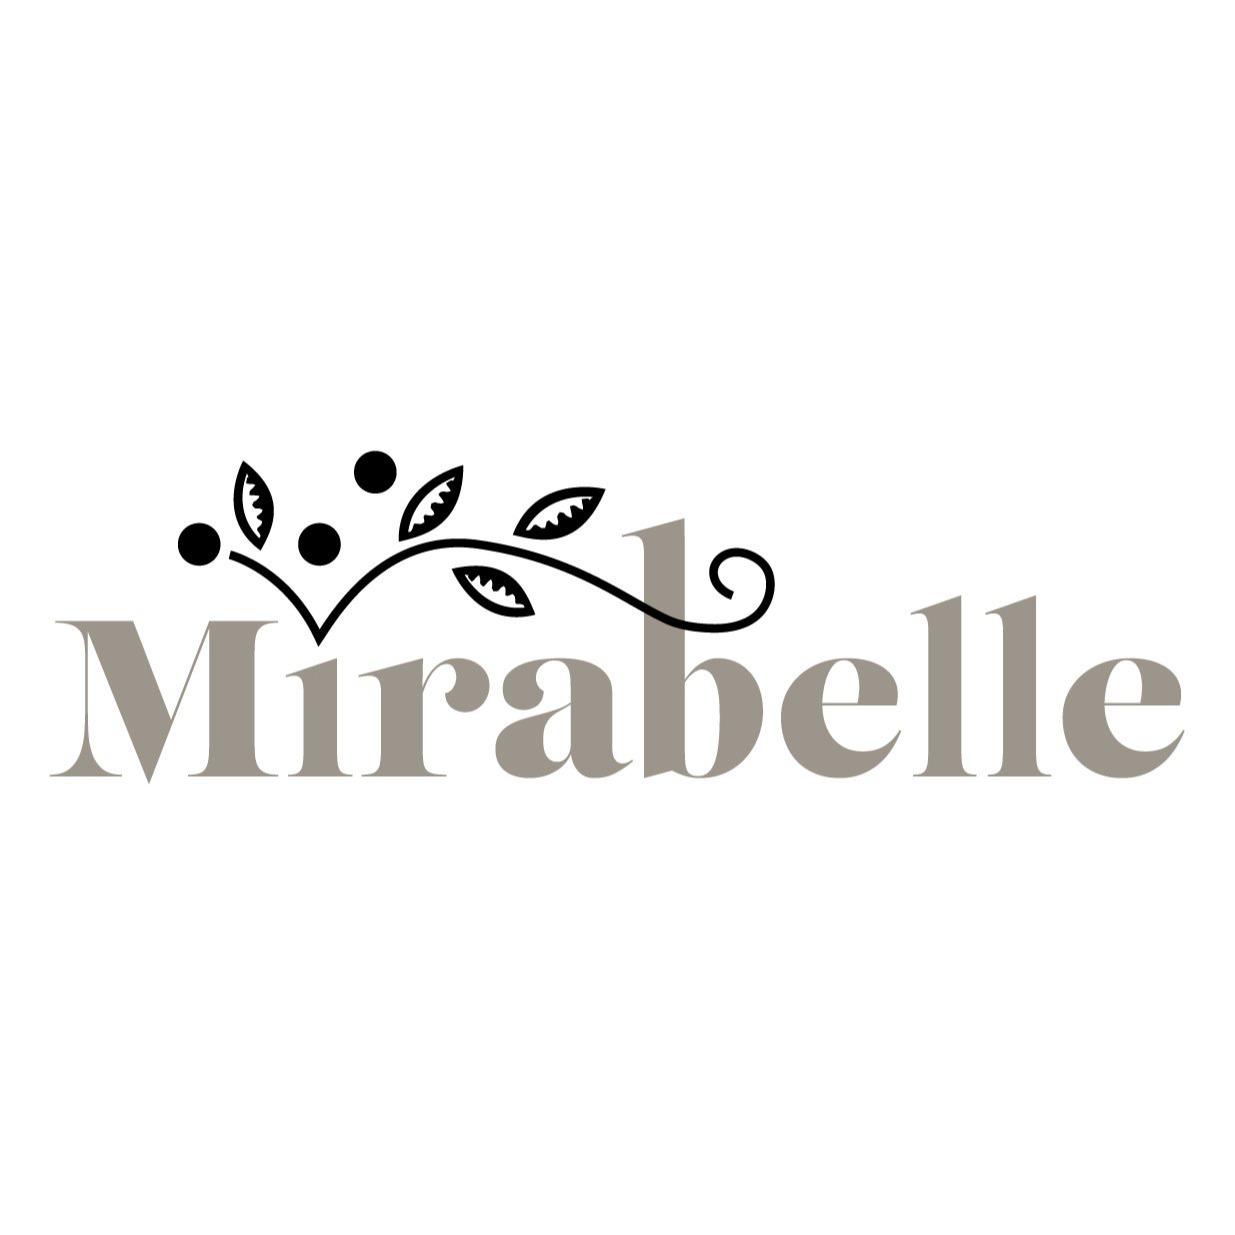 Mirabelle Apartments - Mobile, AL 36608 - (251)343-6800 | ShowMeLocal.com